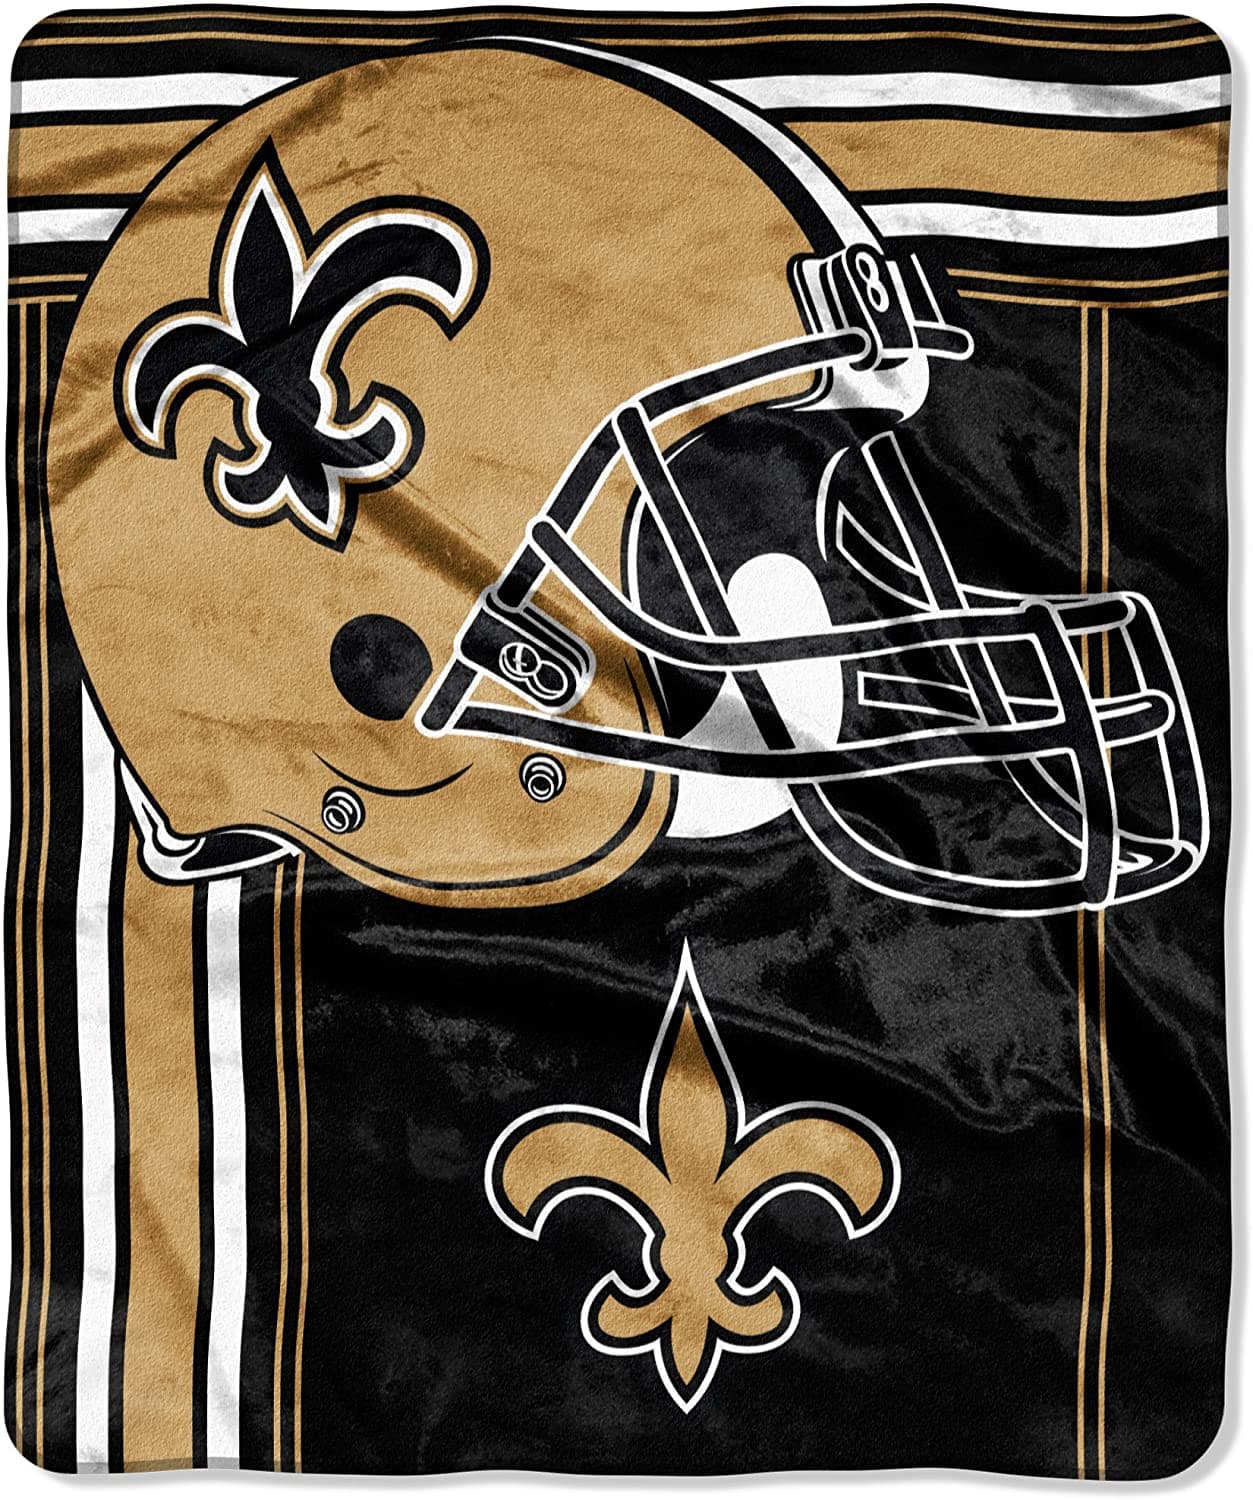 Officially Licensed Nfl Throw New Orleans Saints Fleece Blanket